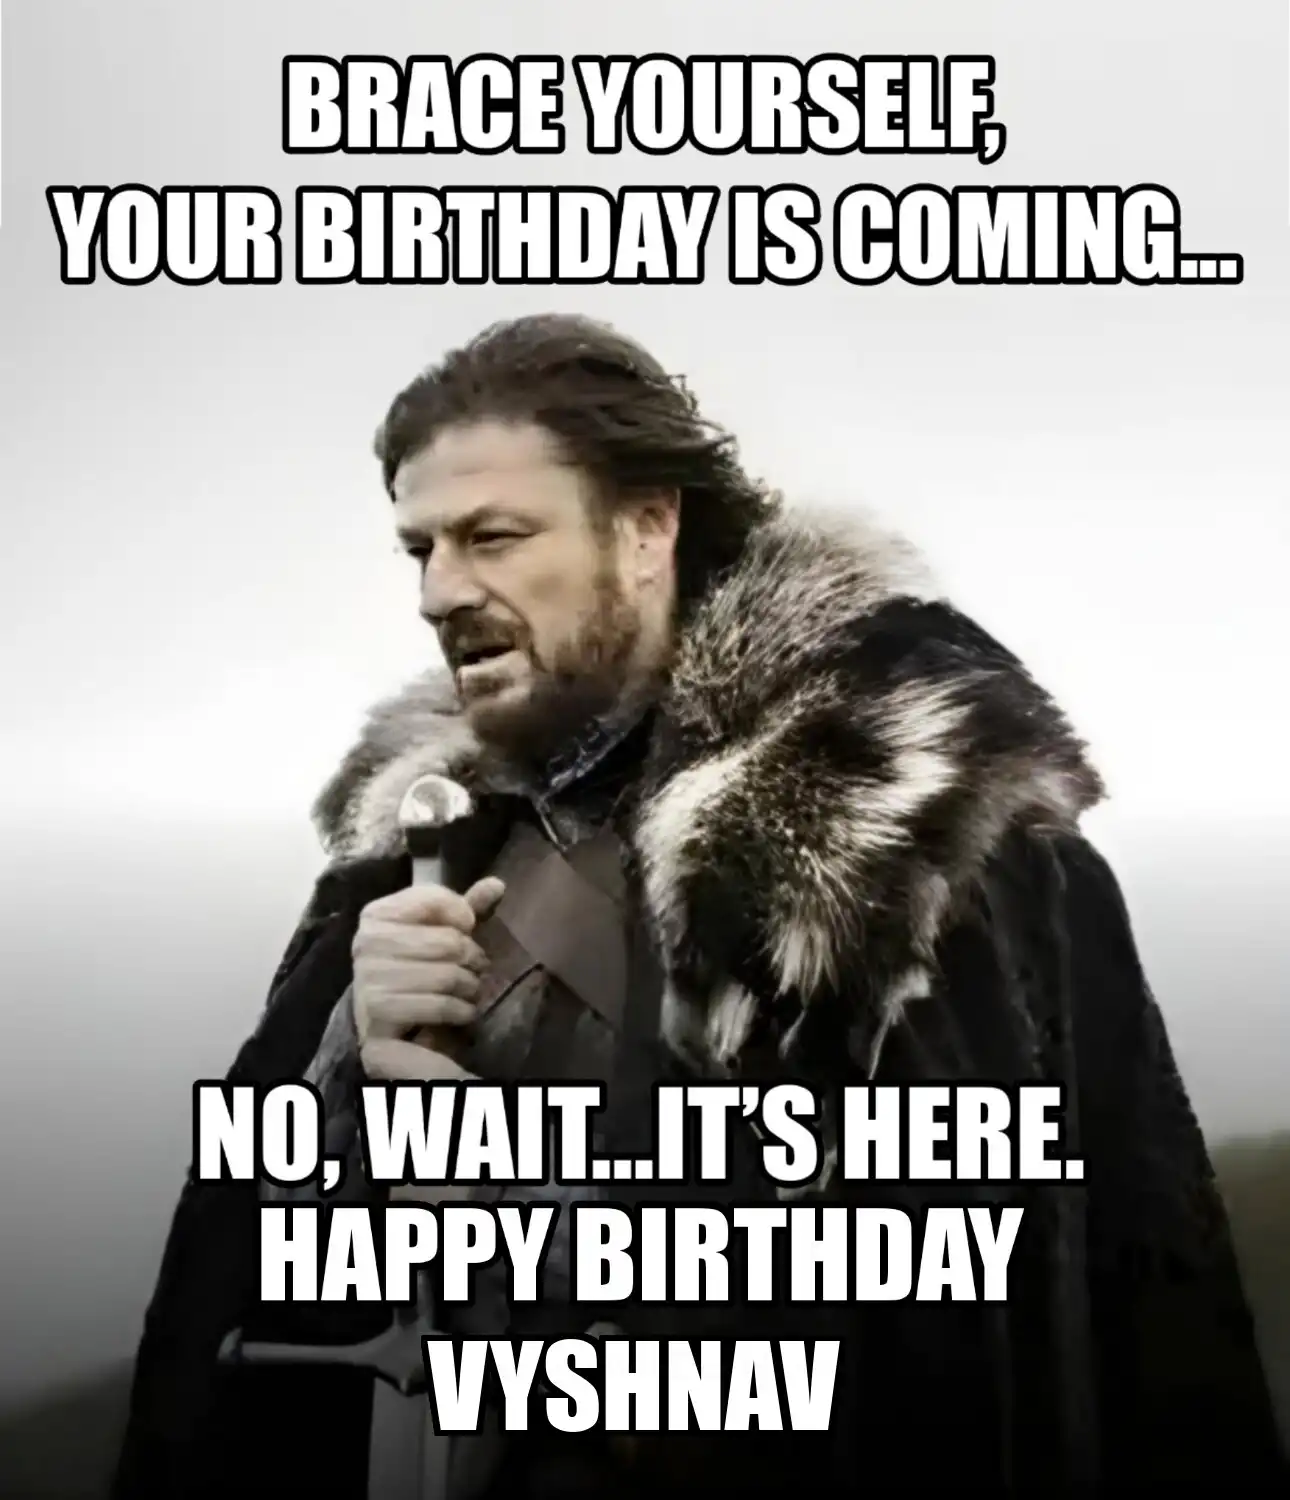 Happy Birthday Vyshnav Brace Yourself Your Birthday Is Coming Meme